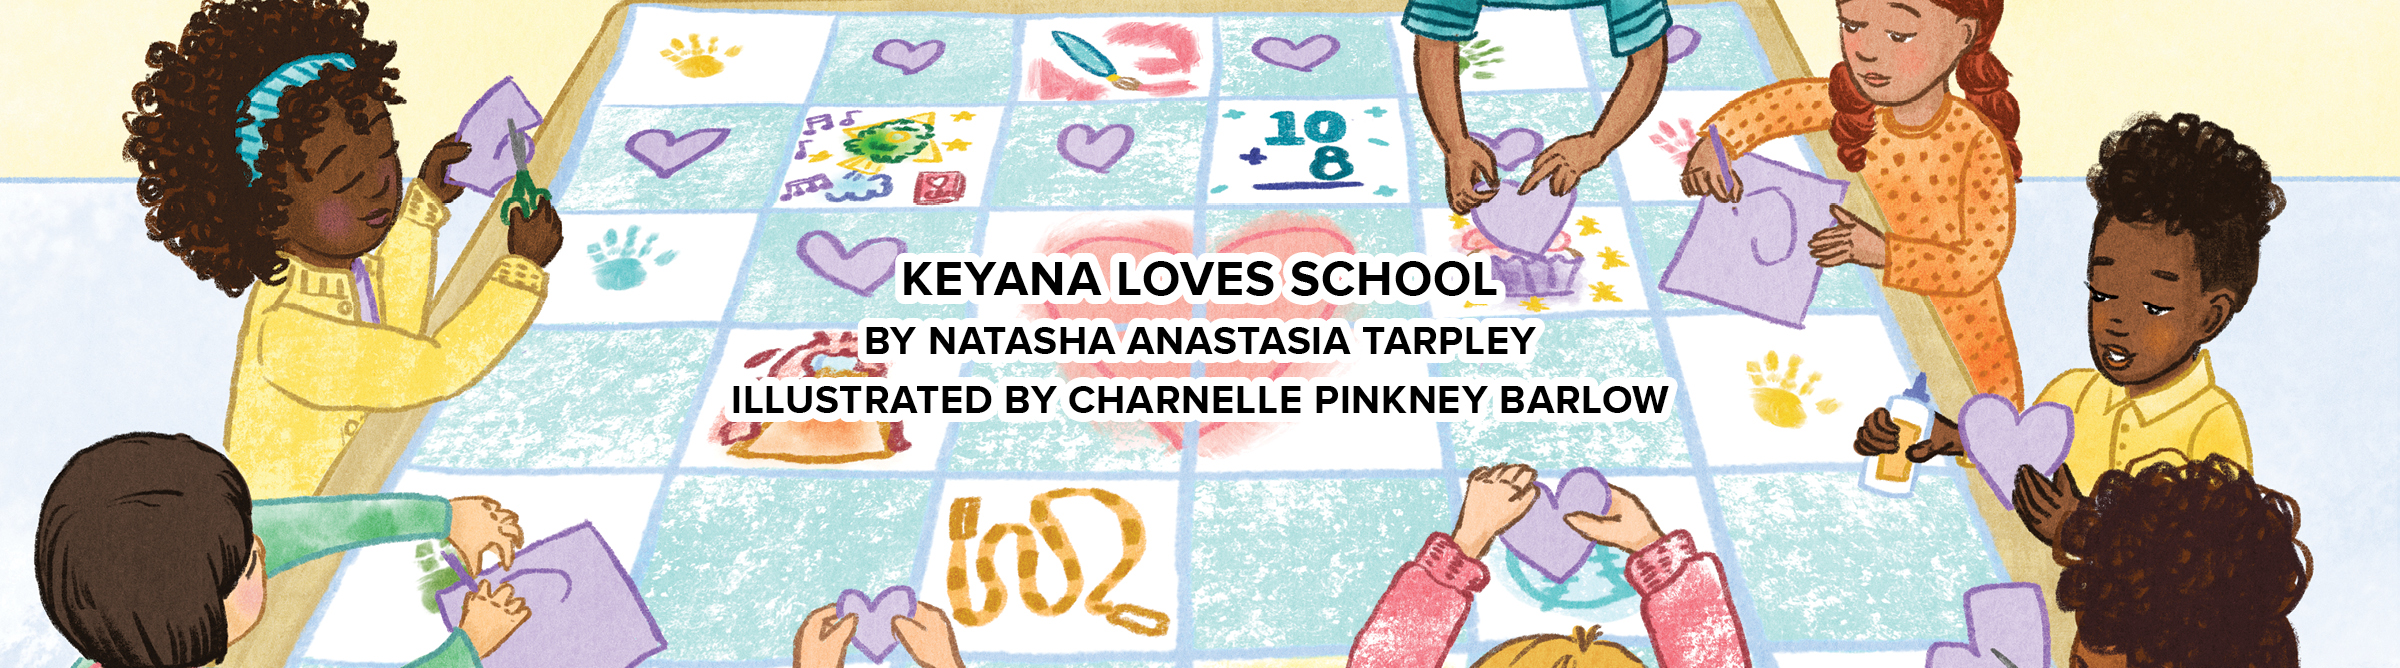 KEYANA LOVES SCHOOL by Natasha Anastasia Tarpley, illustrated by Charnelle Pinkney Barlow 